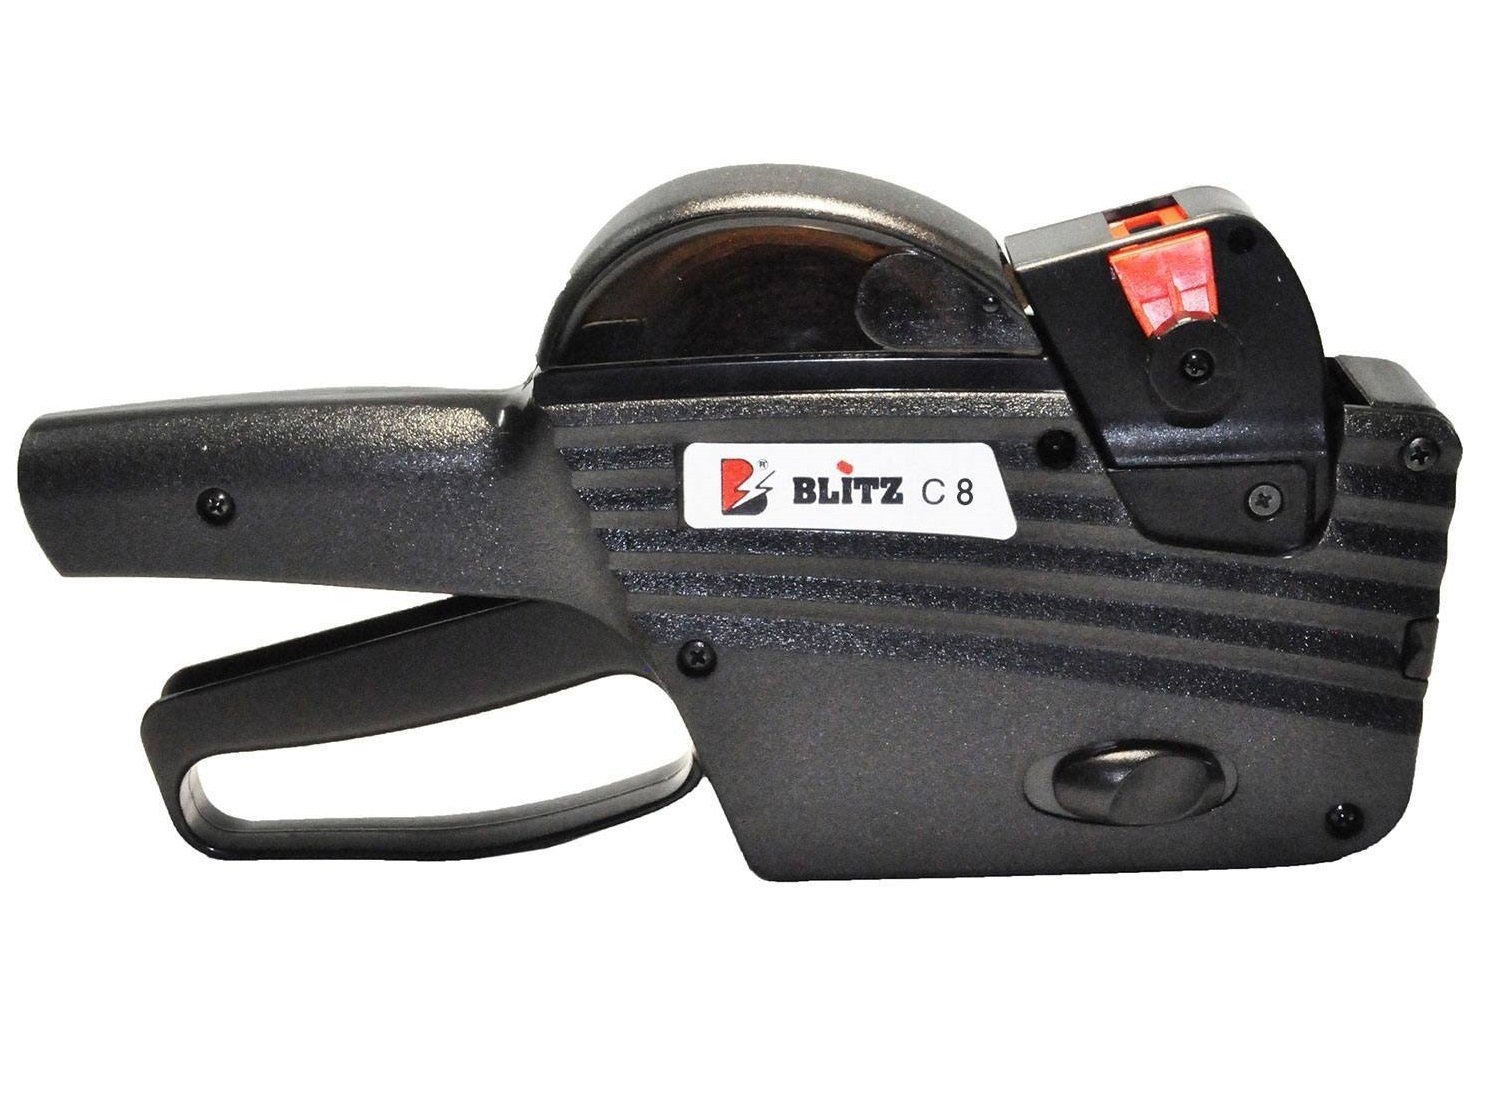 Blitz C8 Price Gun Handheld Labeller 1 Line Made in Italy  